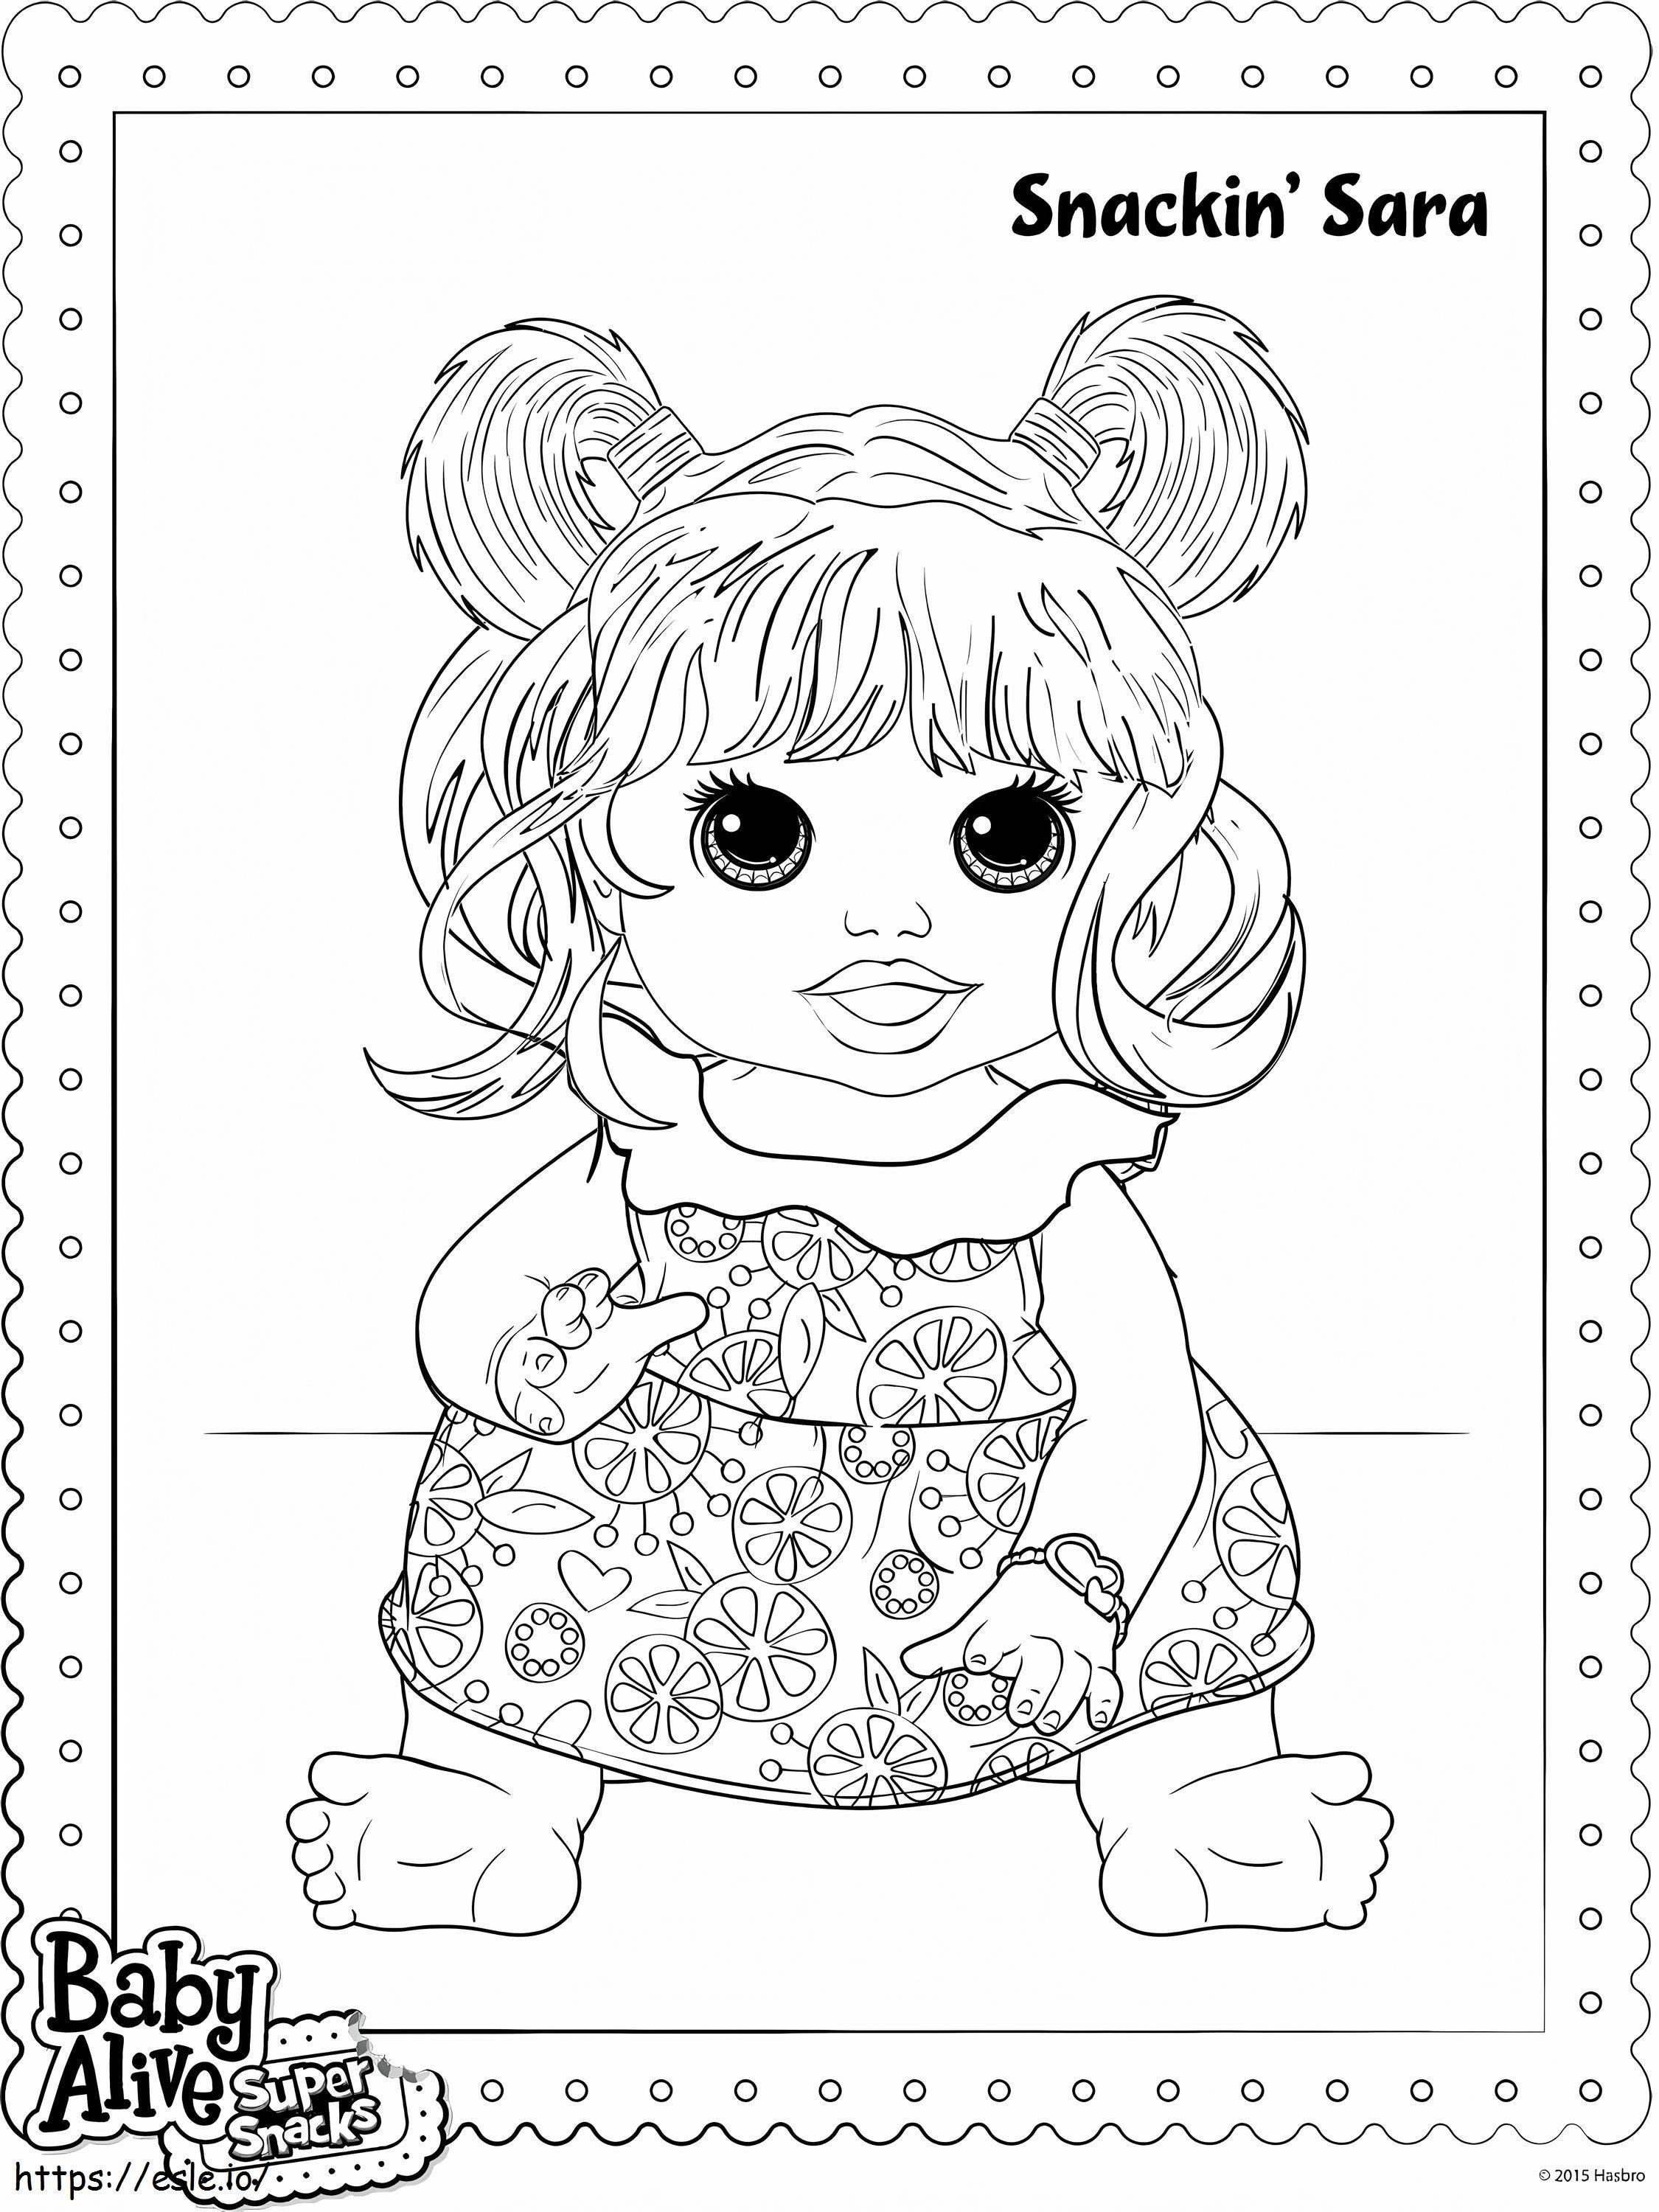 Snakin Sara Baby Alive coloring page